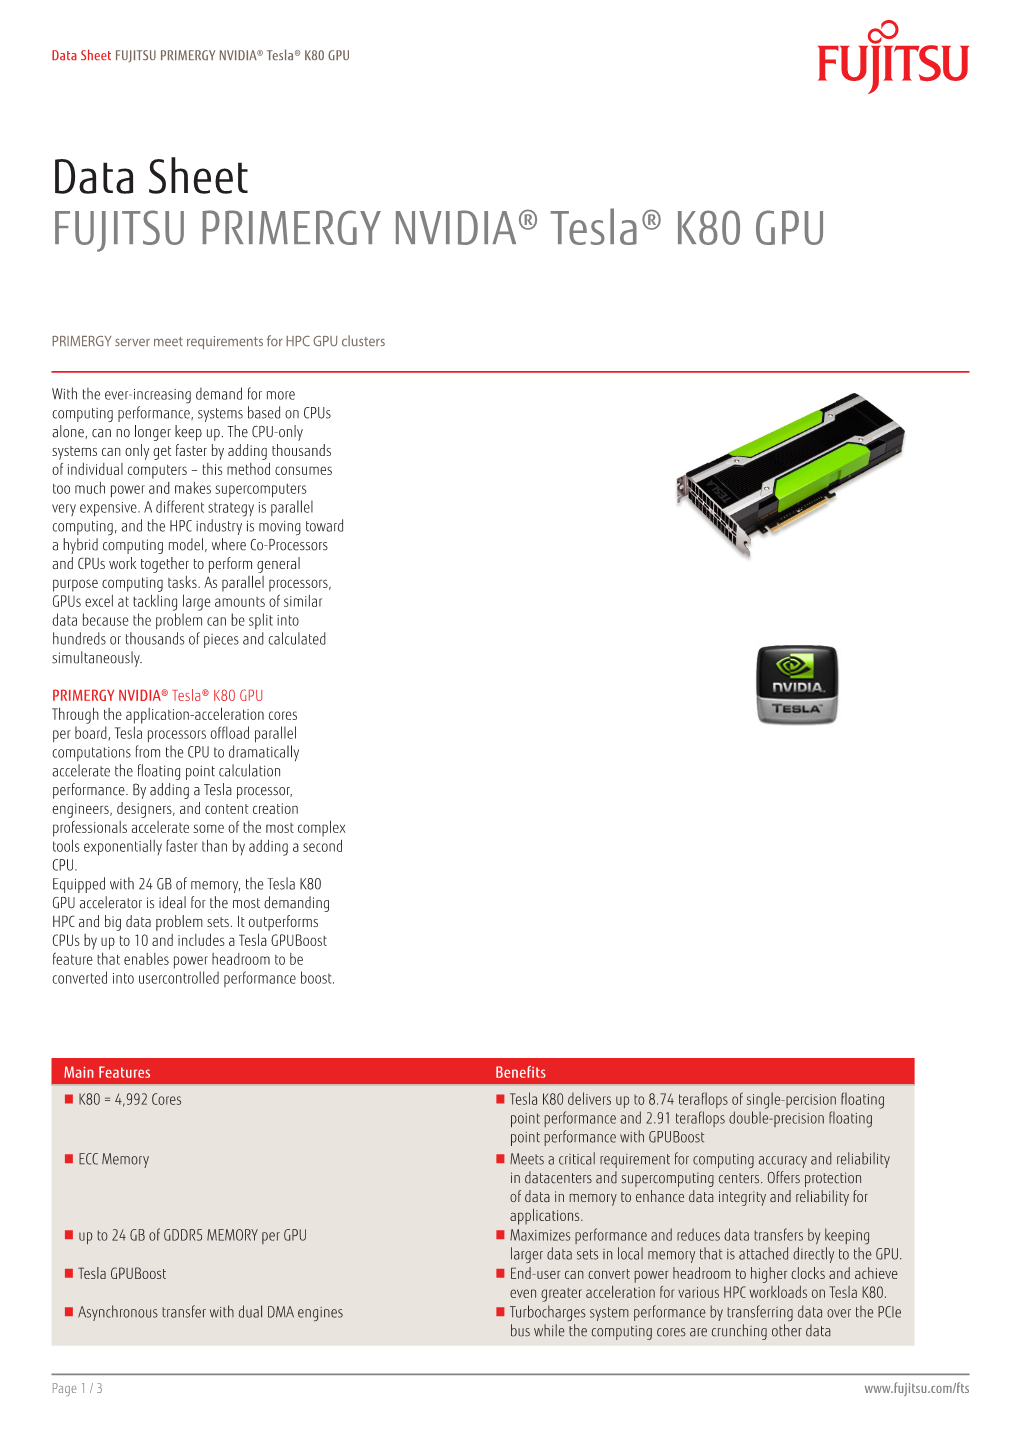 Data Sheet FUJITSU PRIMERGY NVIDIA® Tesla® K80 GPU